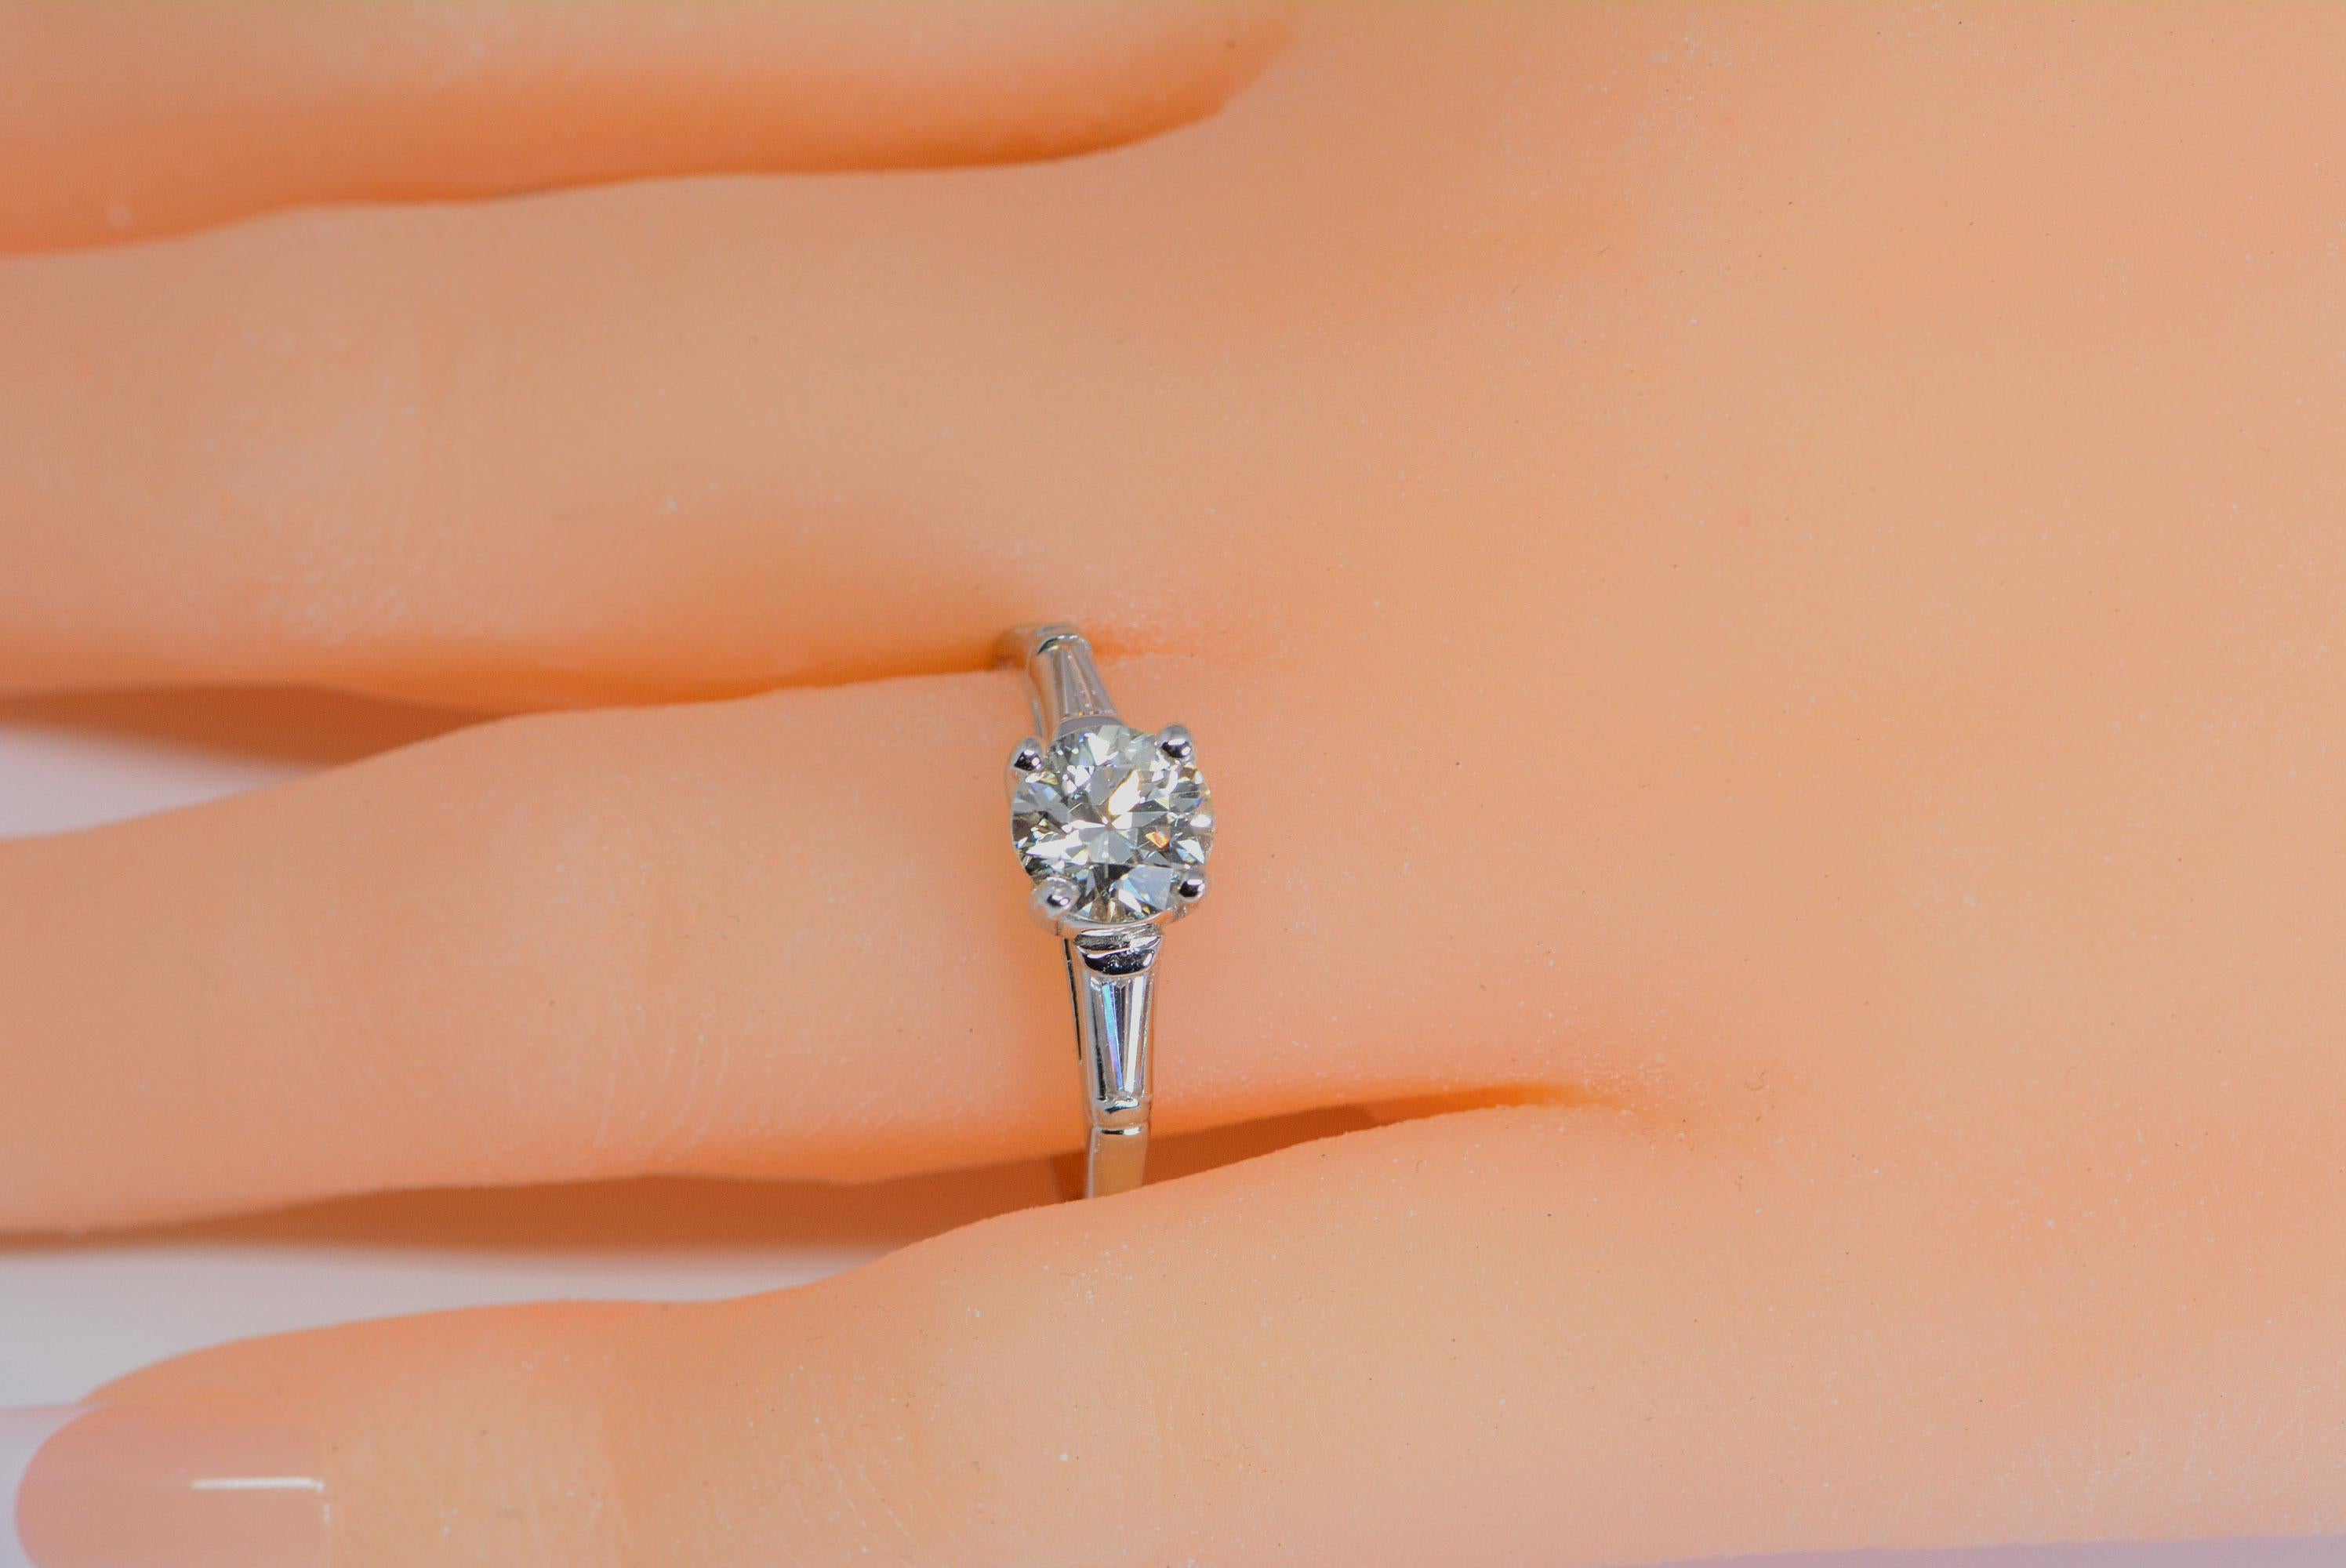 1.9 carat diamond ring on finger